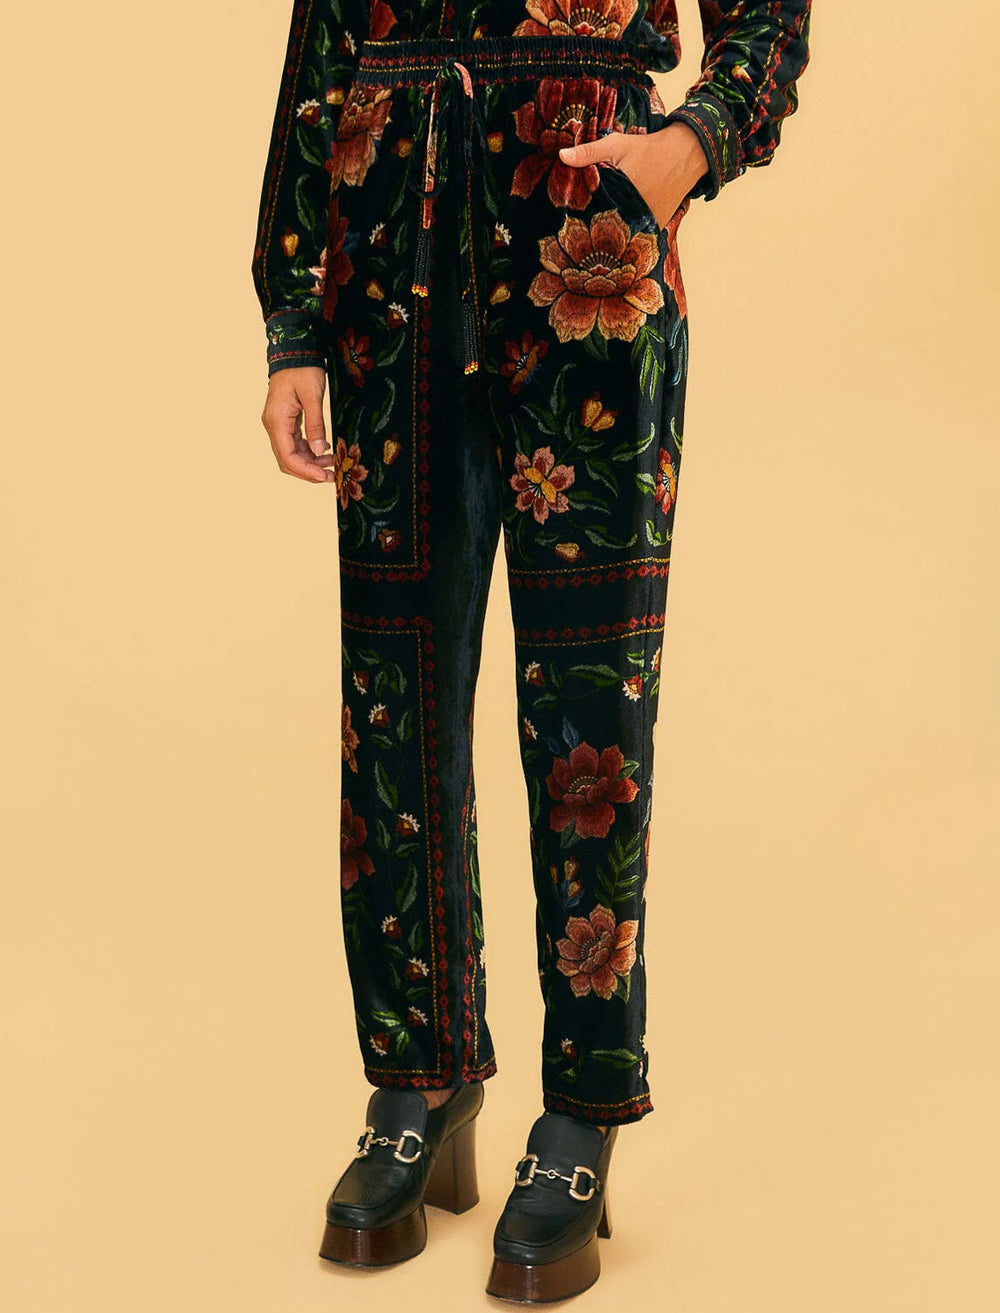 LOUIS VUITTON  Wonderland Flat Ranger (Suede) – DRESS MOOD CLOTHING